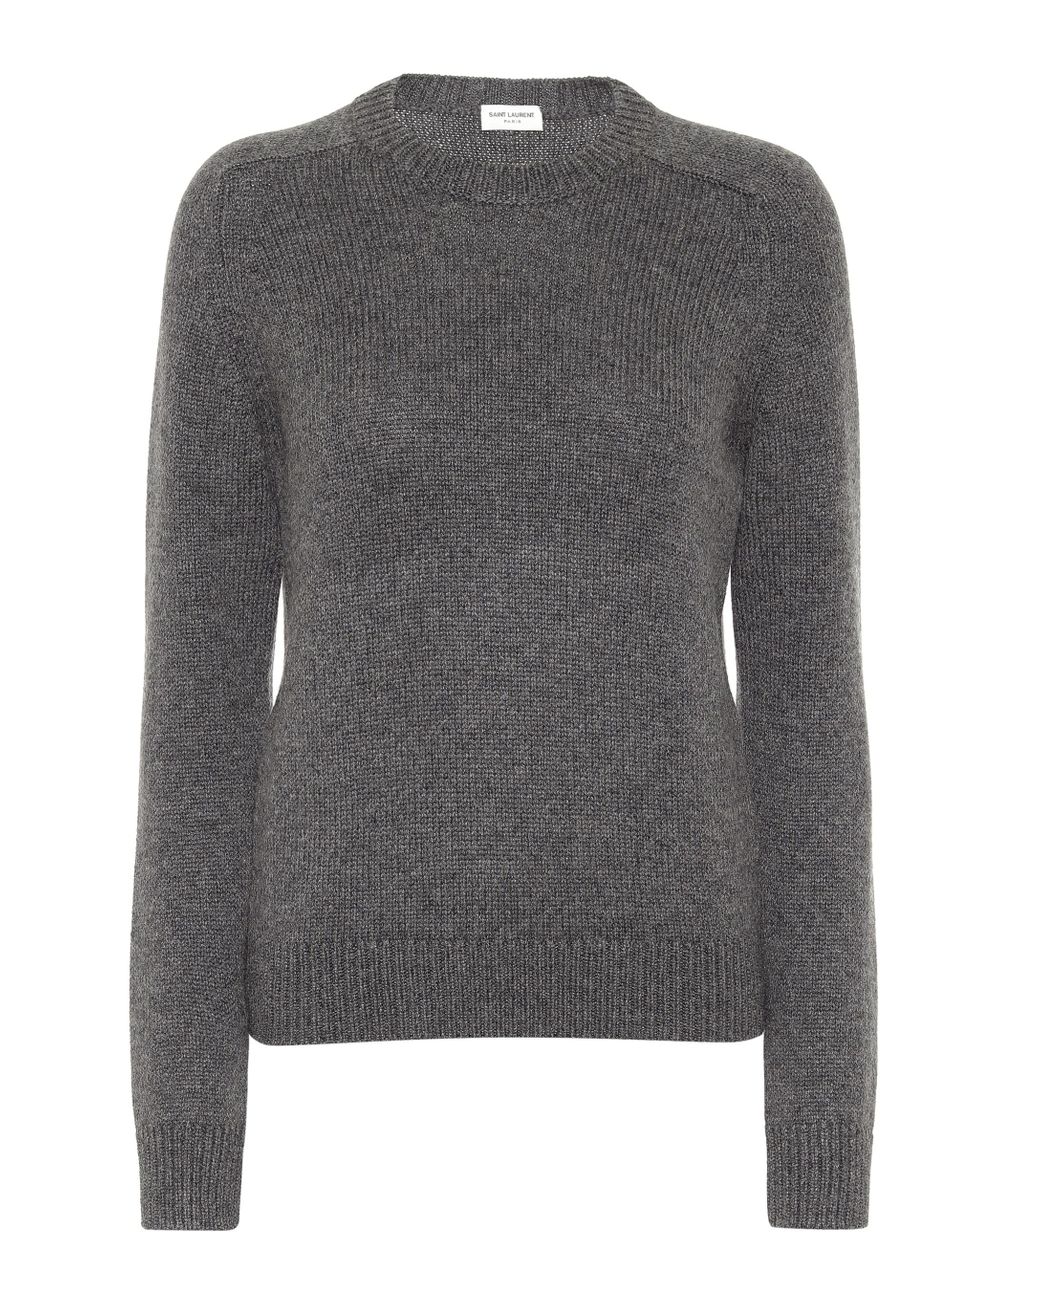 Saint Laurent Wool Camel-hair Sweater in Grey (Gray) - Lyst